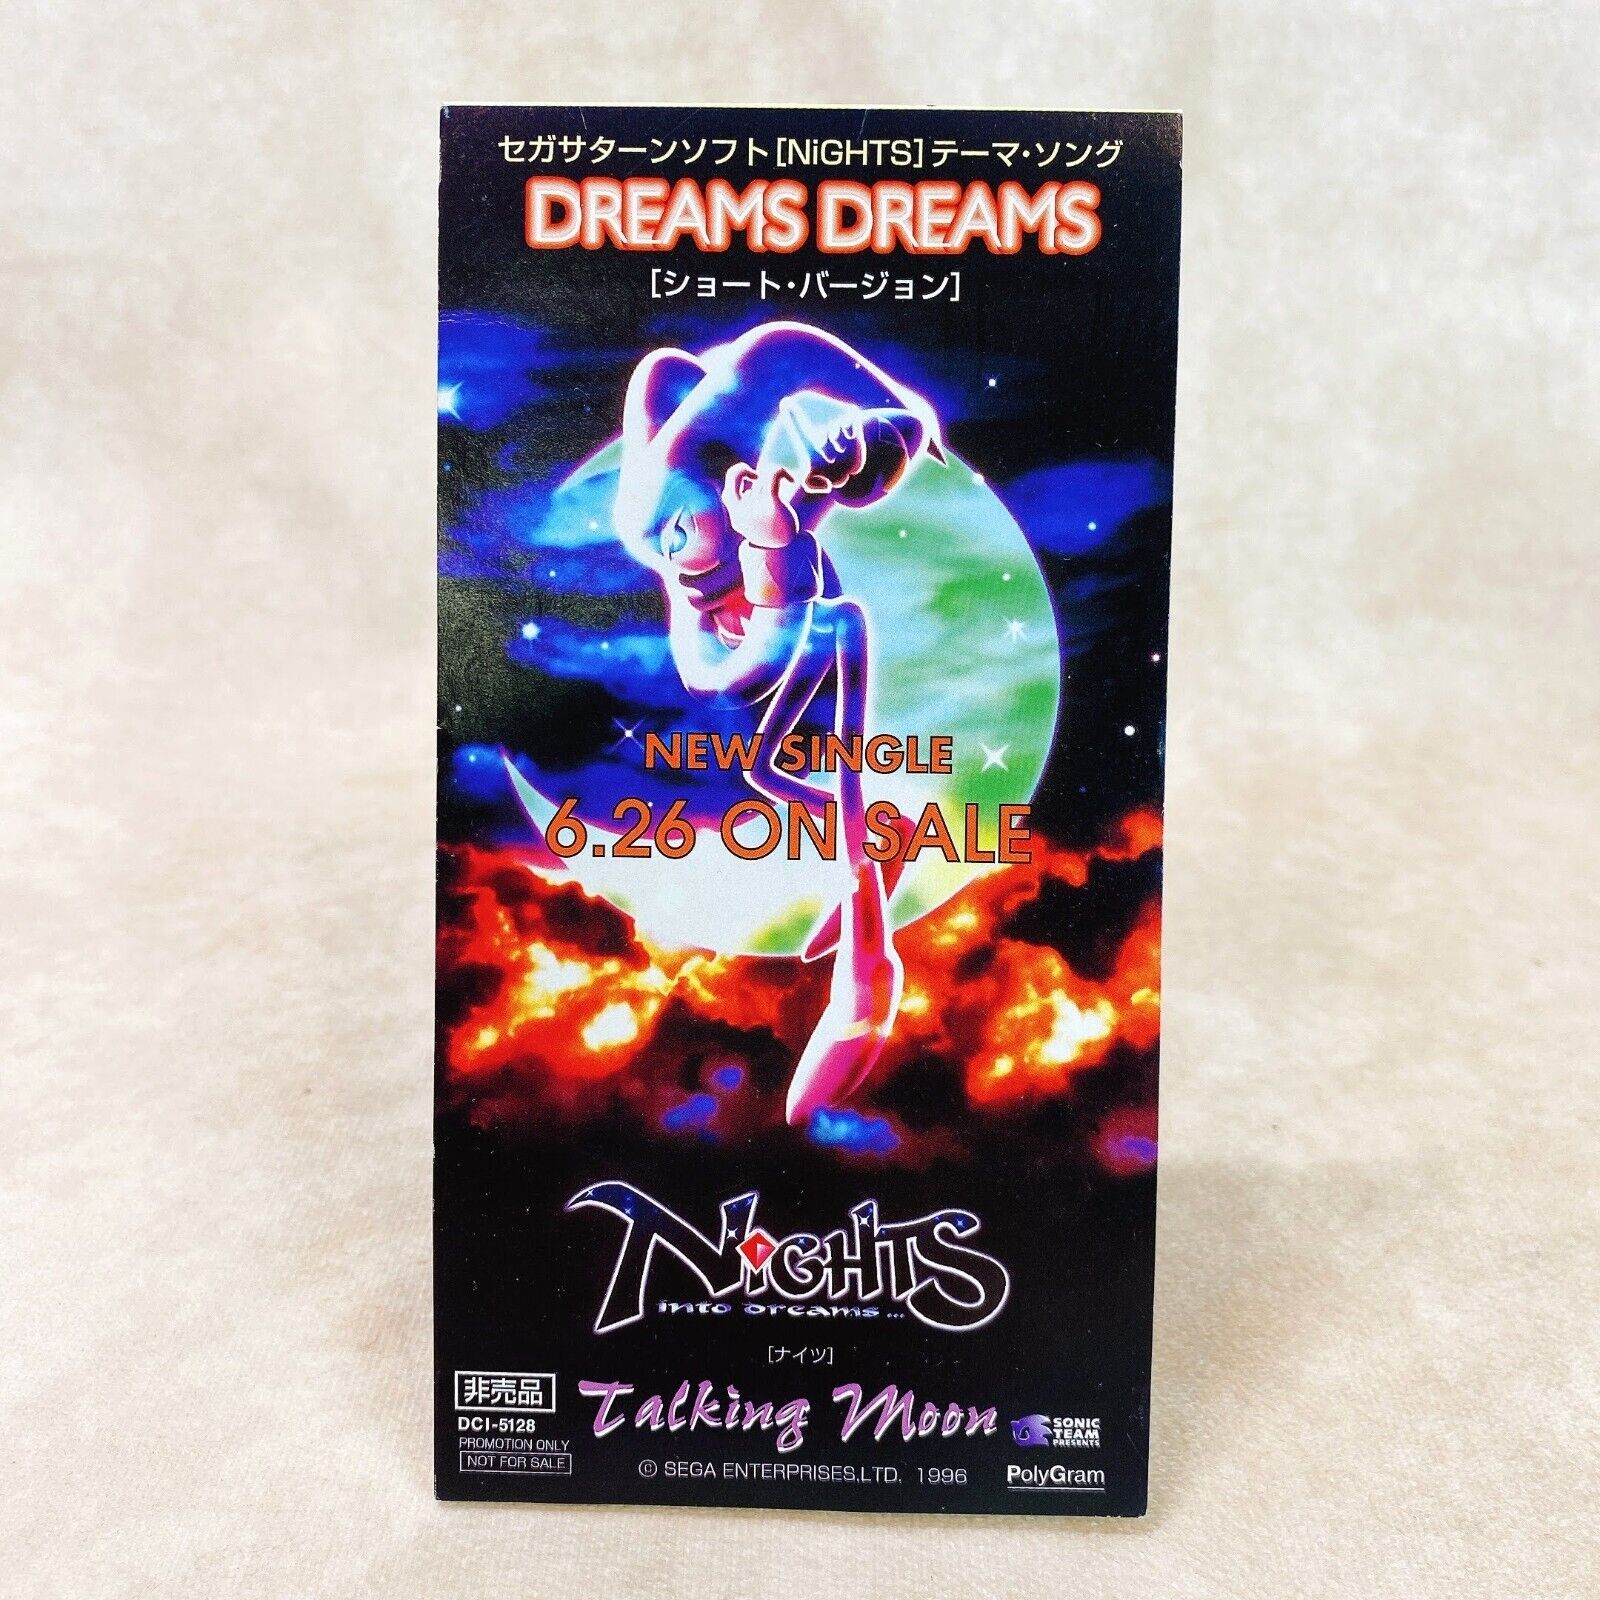 RARE 1996 SEGA Nights DREAMS DERAMS promotion CD Soundtrack game